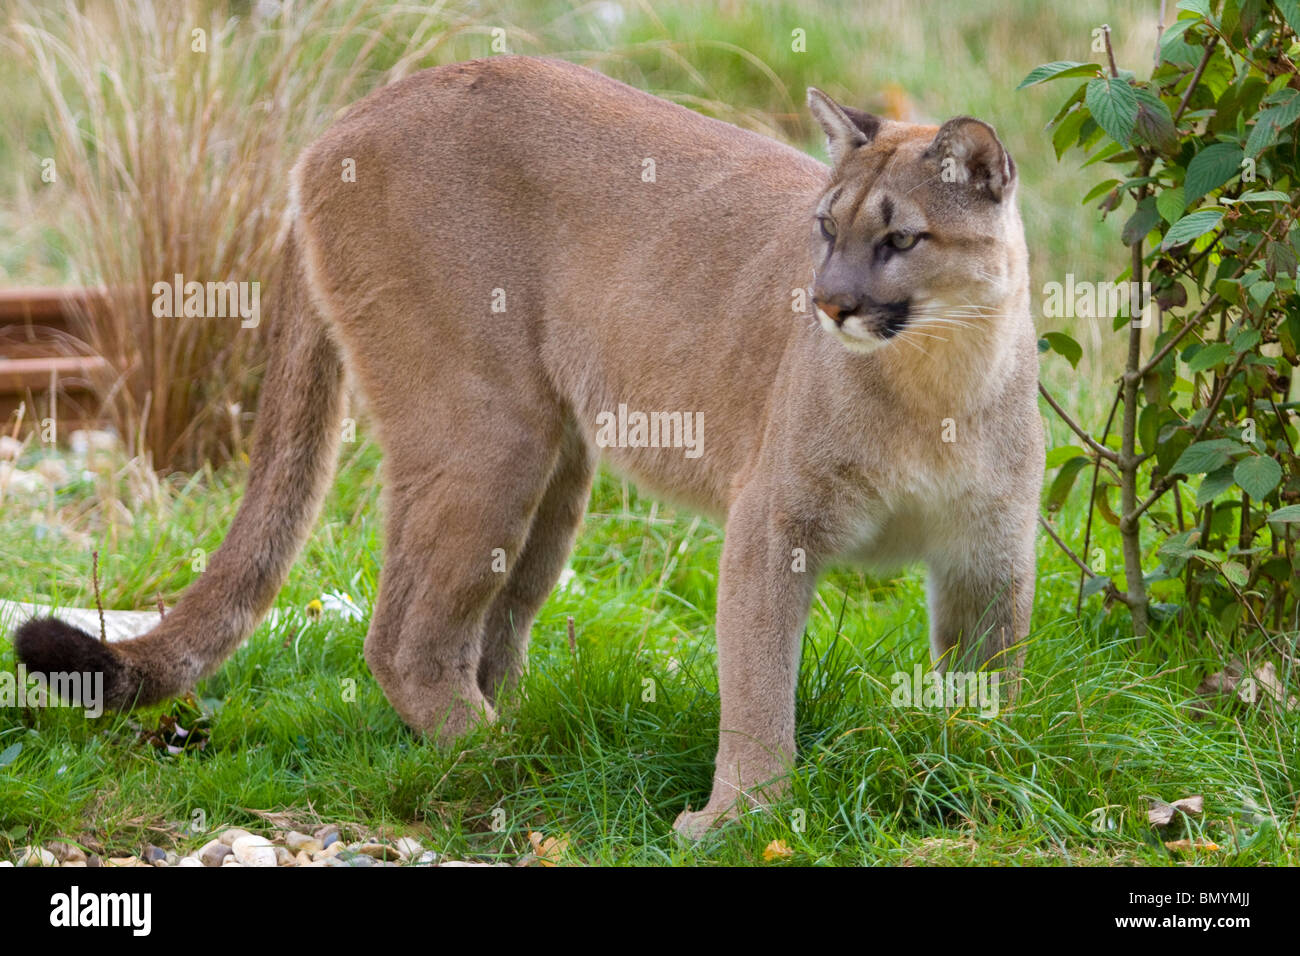 Adult female Puma standing on grass Stock Photo